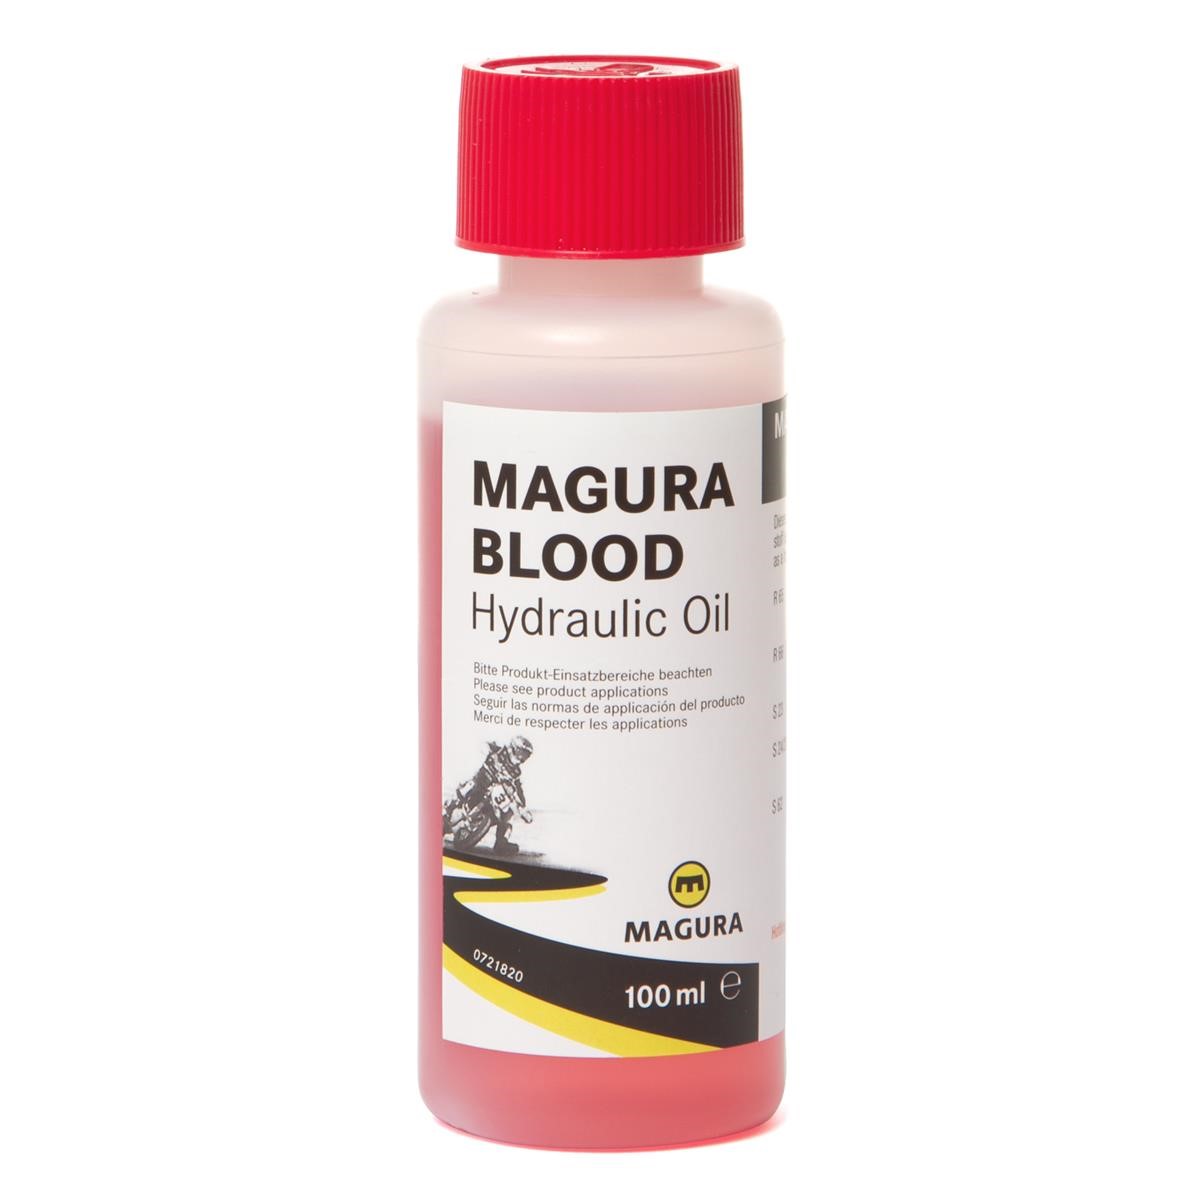 Magura Bio Hydraulic Oil Blood 100 ml